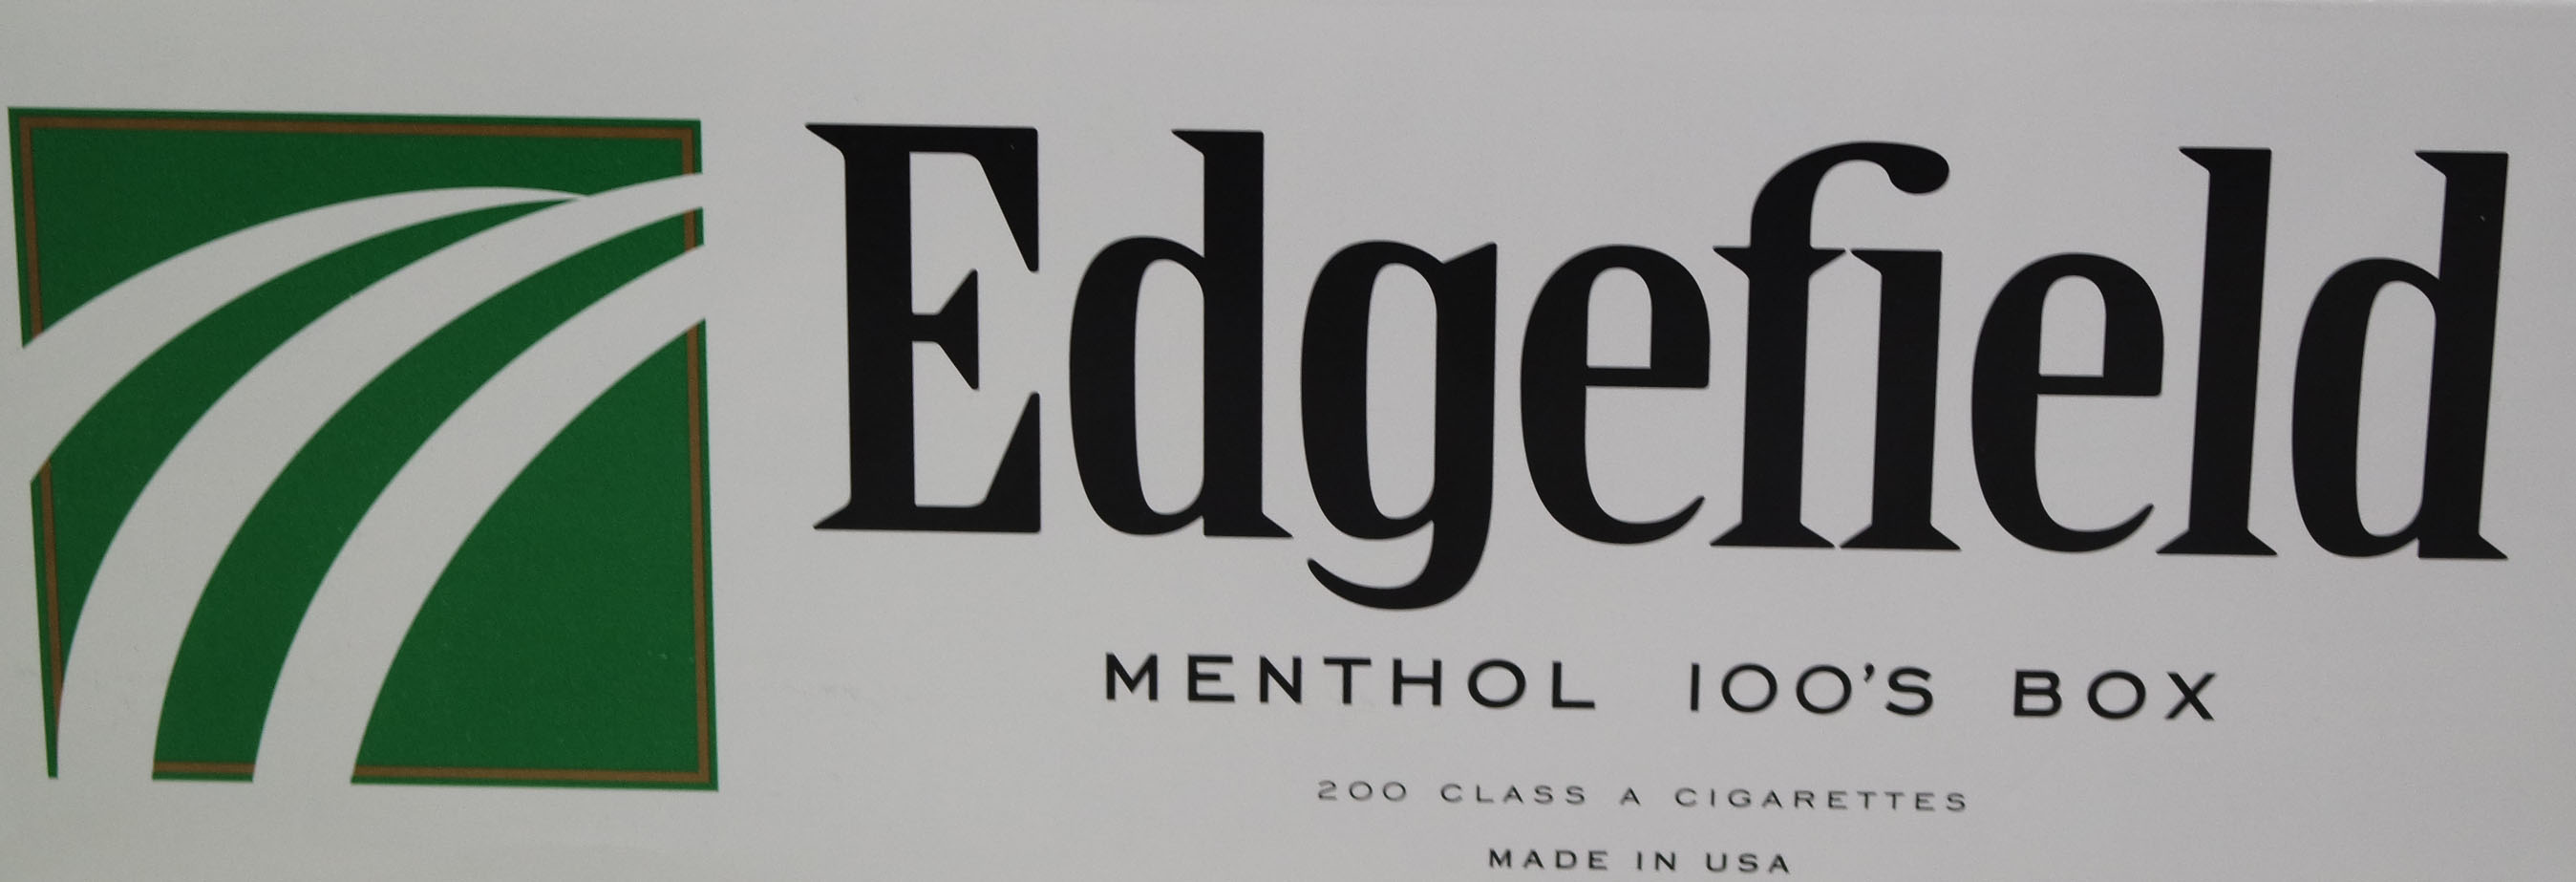 Edgefield menthol 100box